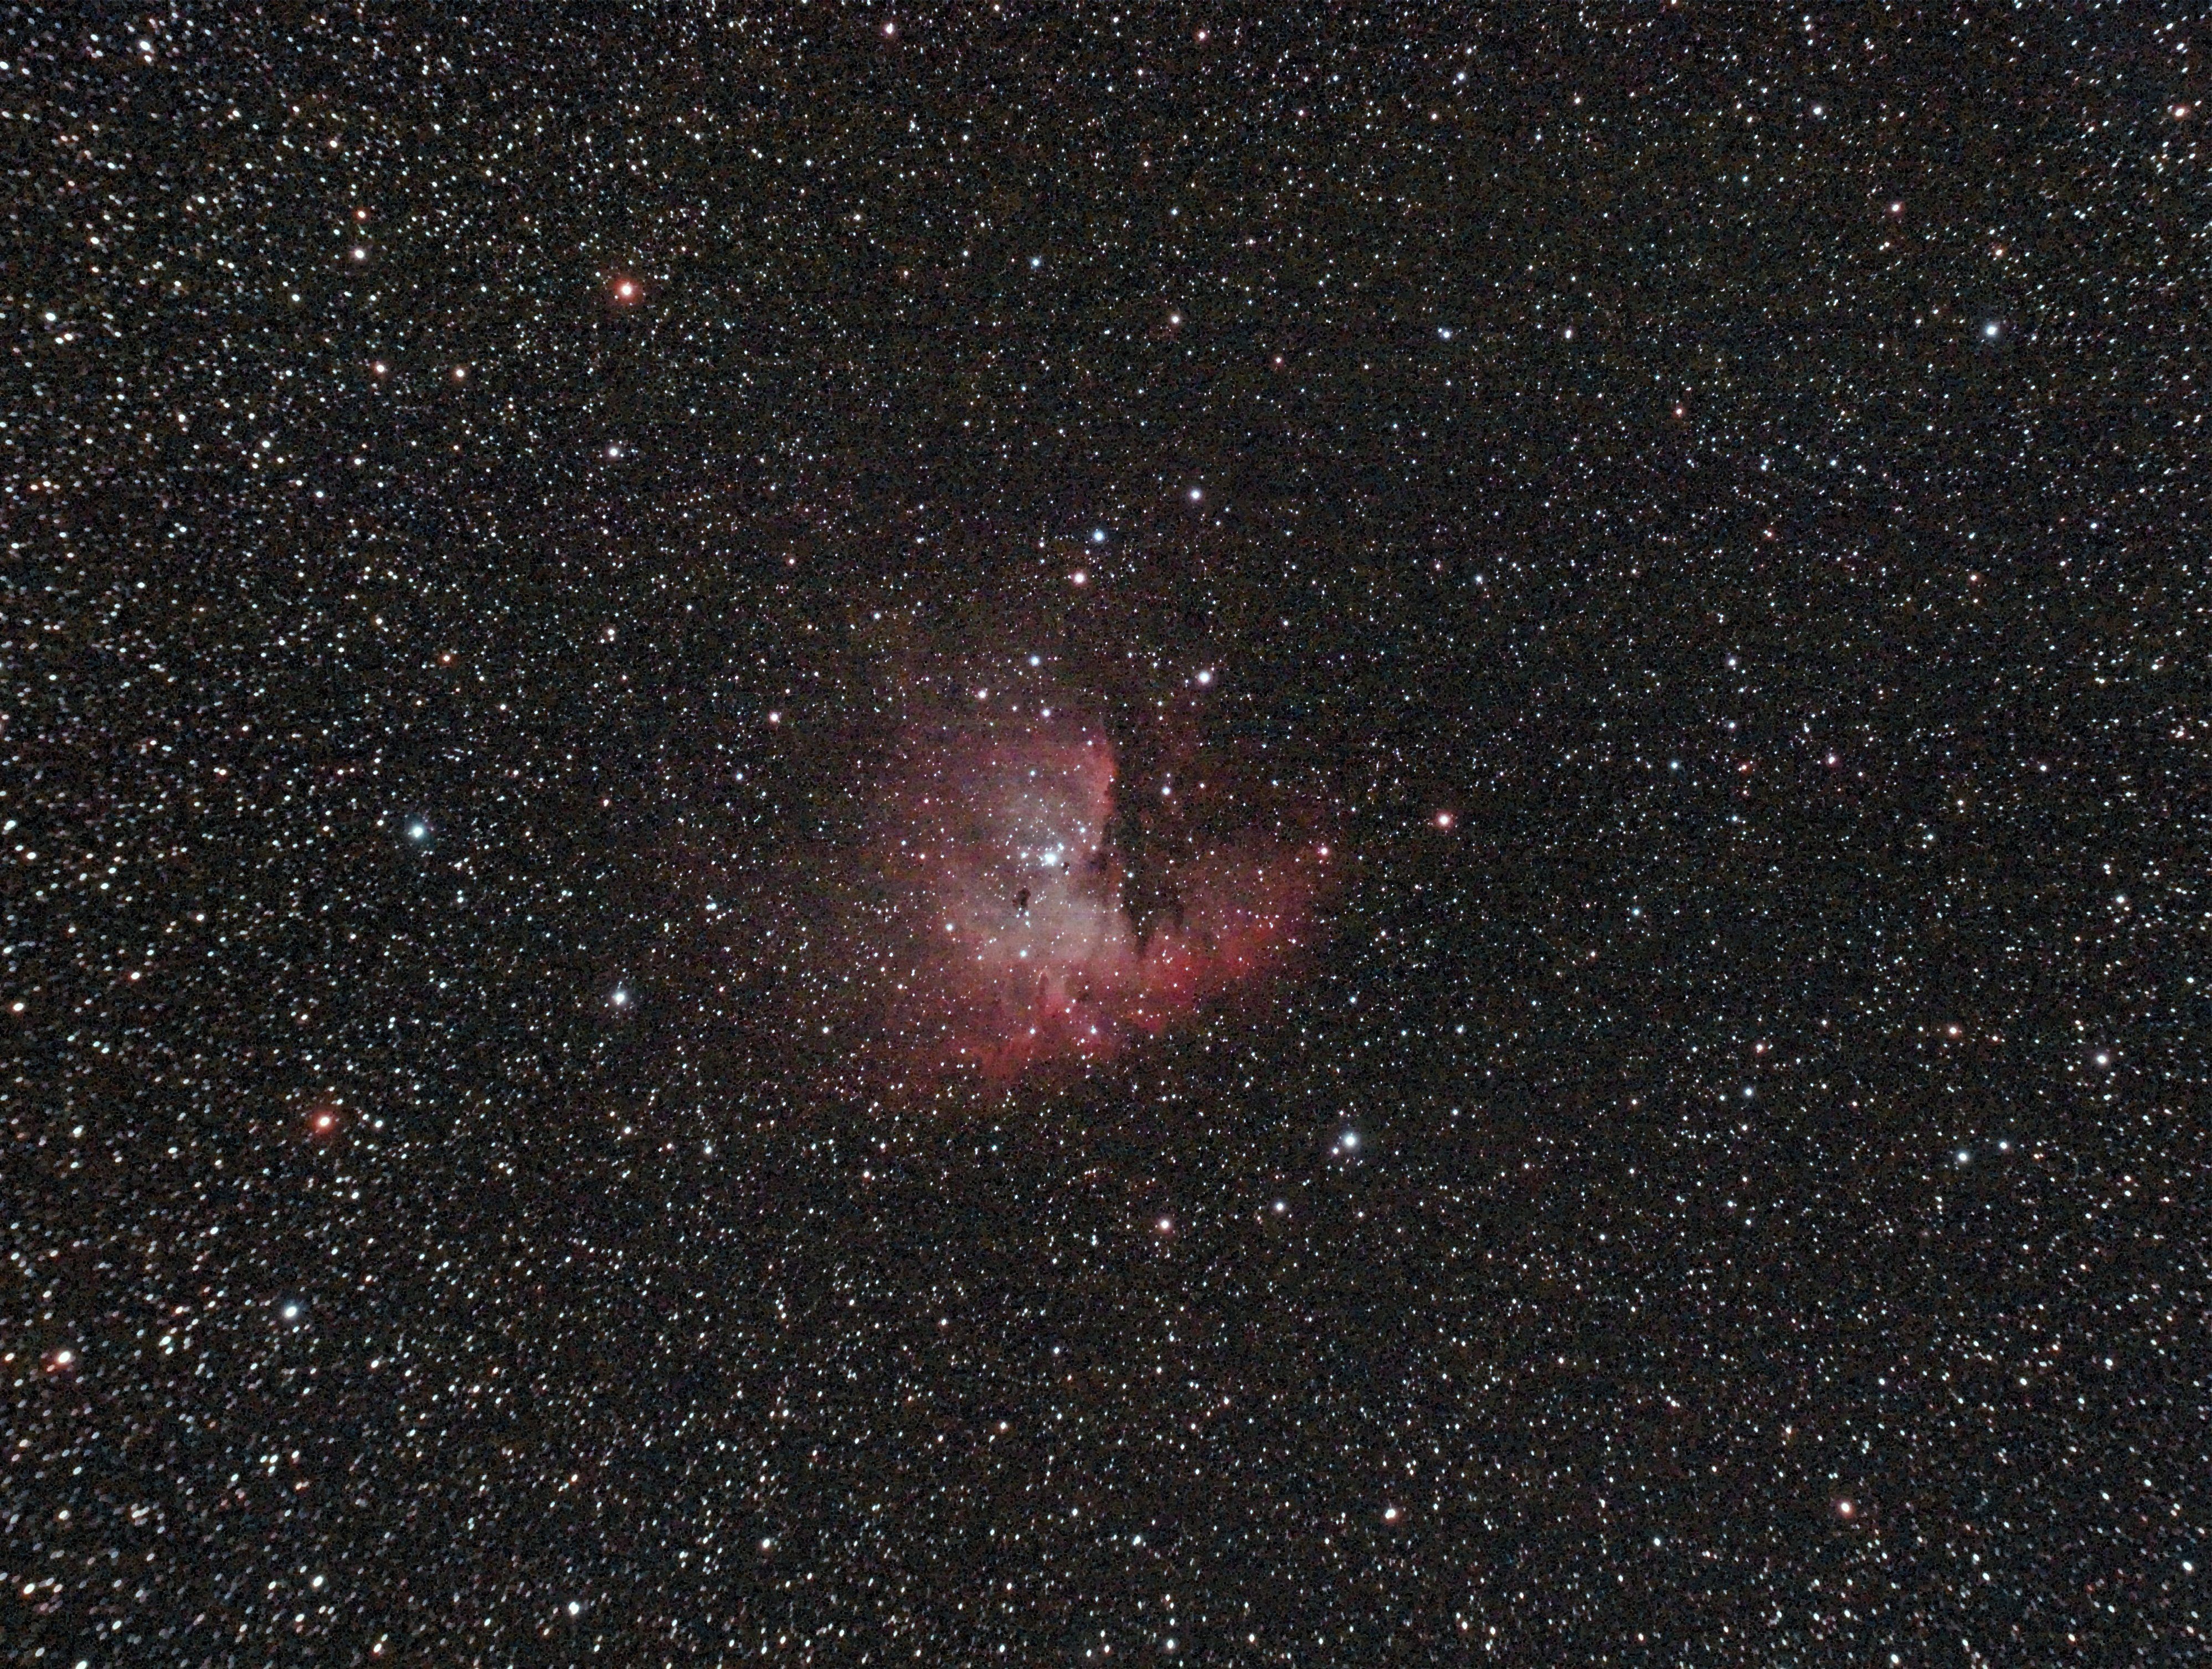 NGC281_230819Gimp1.jpg